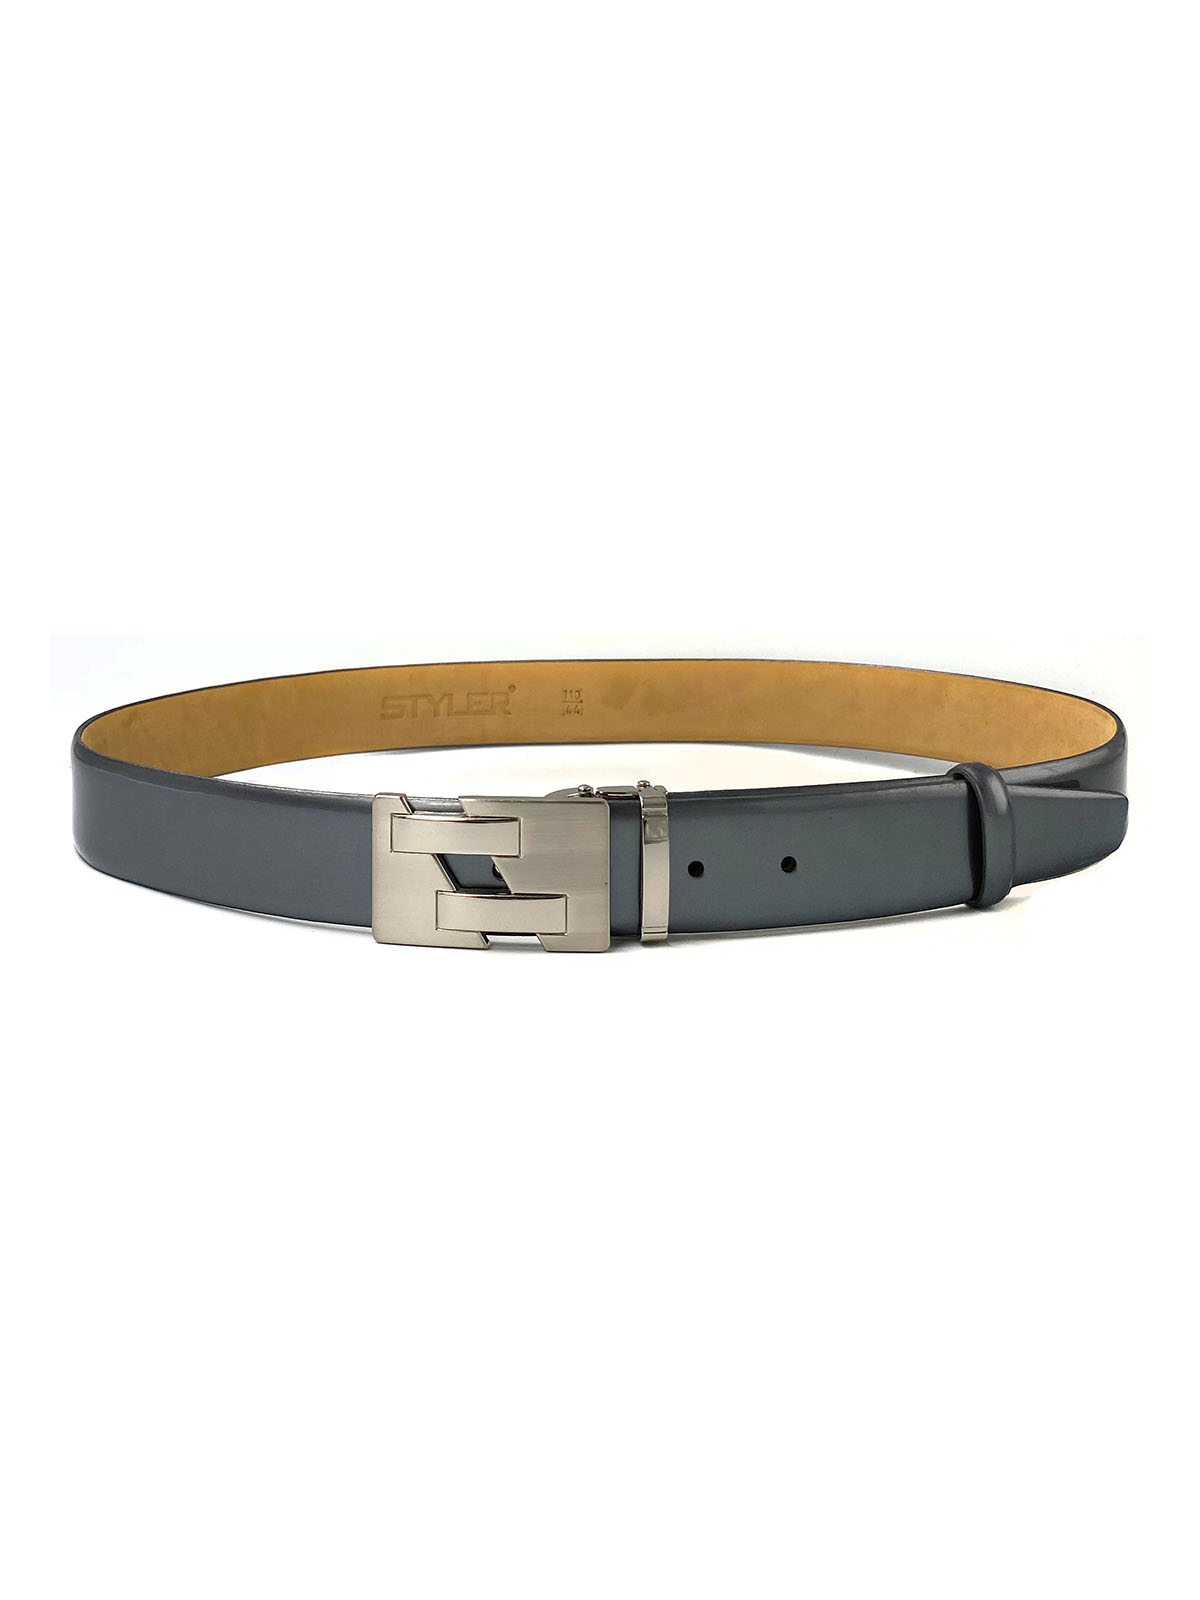 Gray leather belt - 10446 - € 10.12 img2